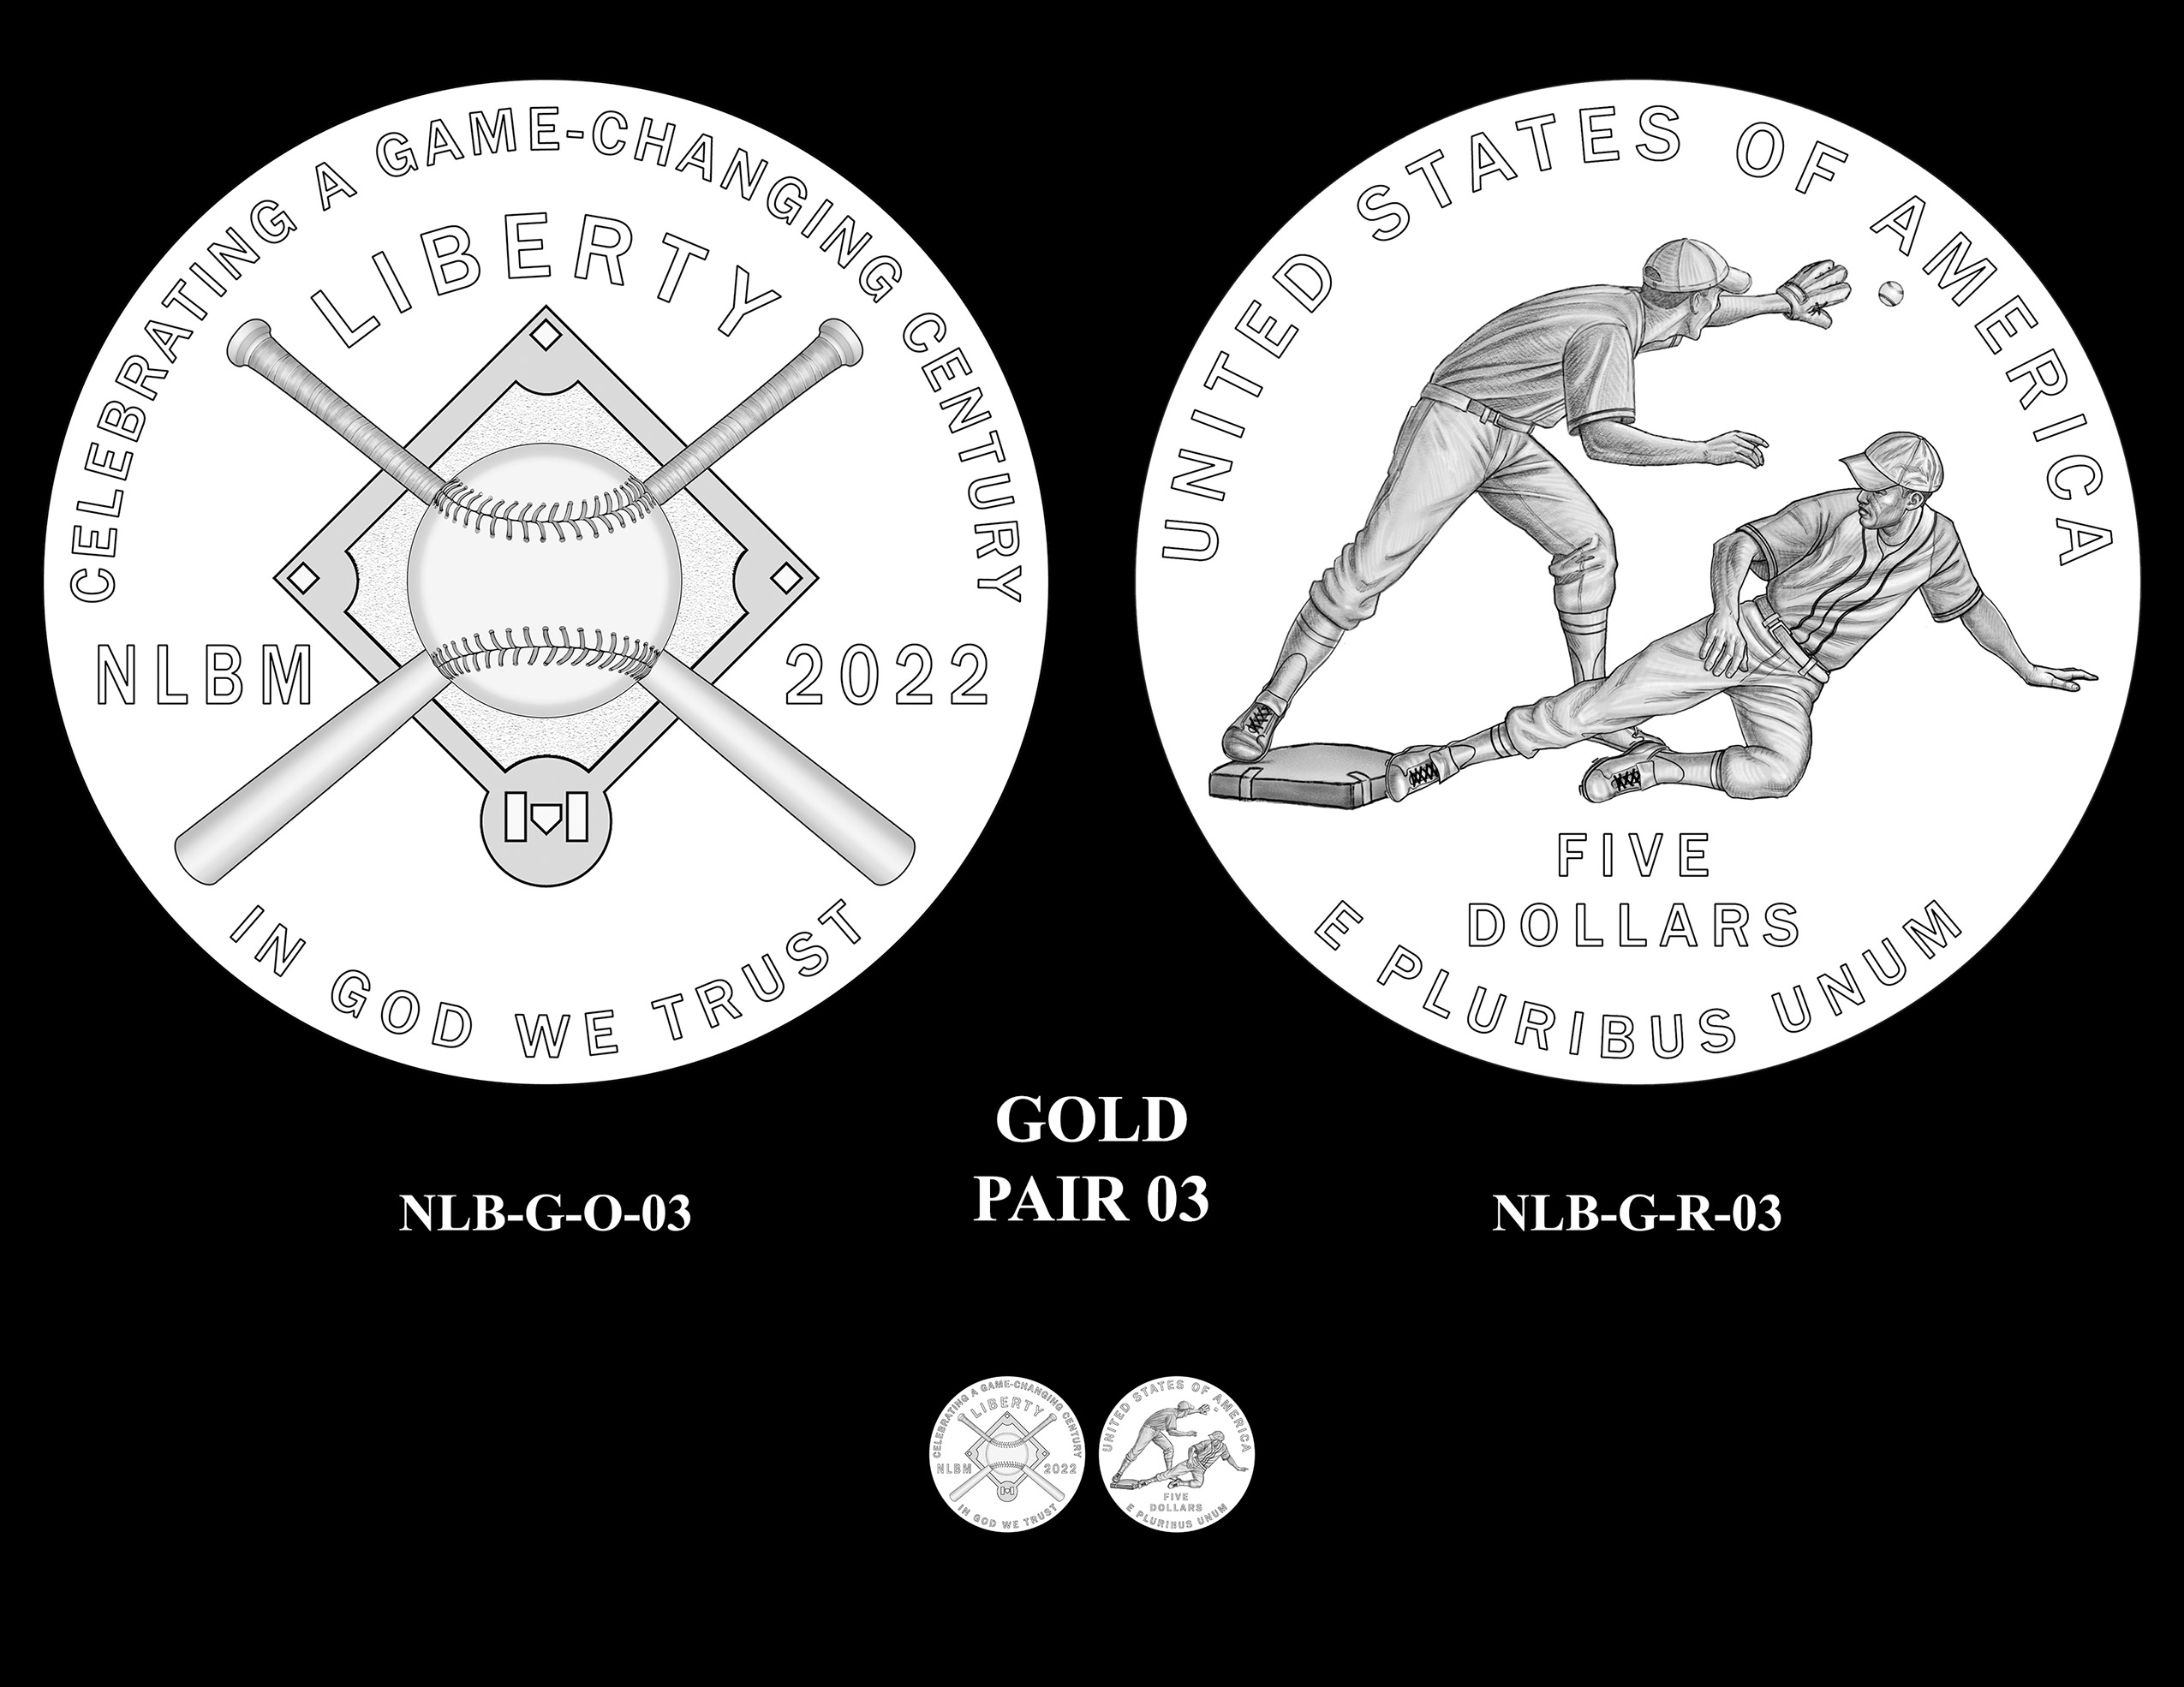 Gold Pair 03 -- Negro Leagues Baseball Commemorative Coin Program